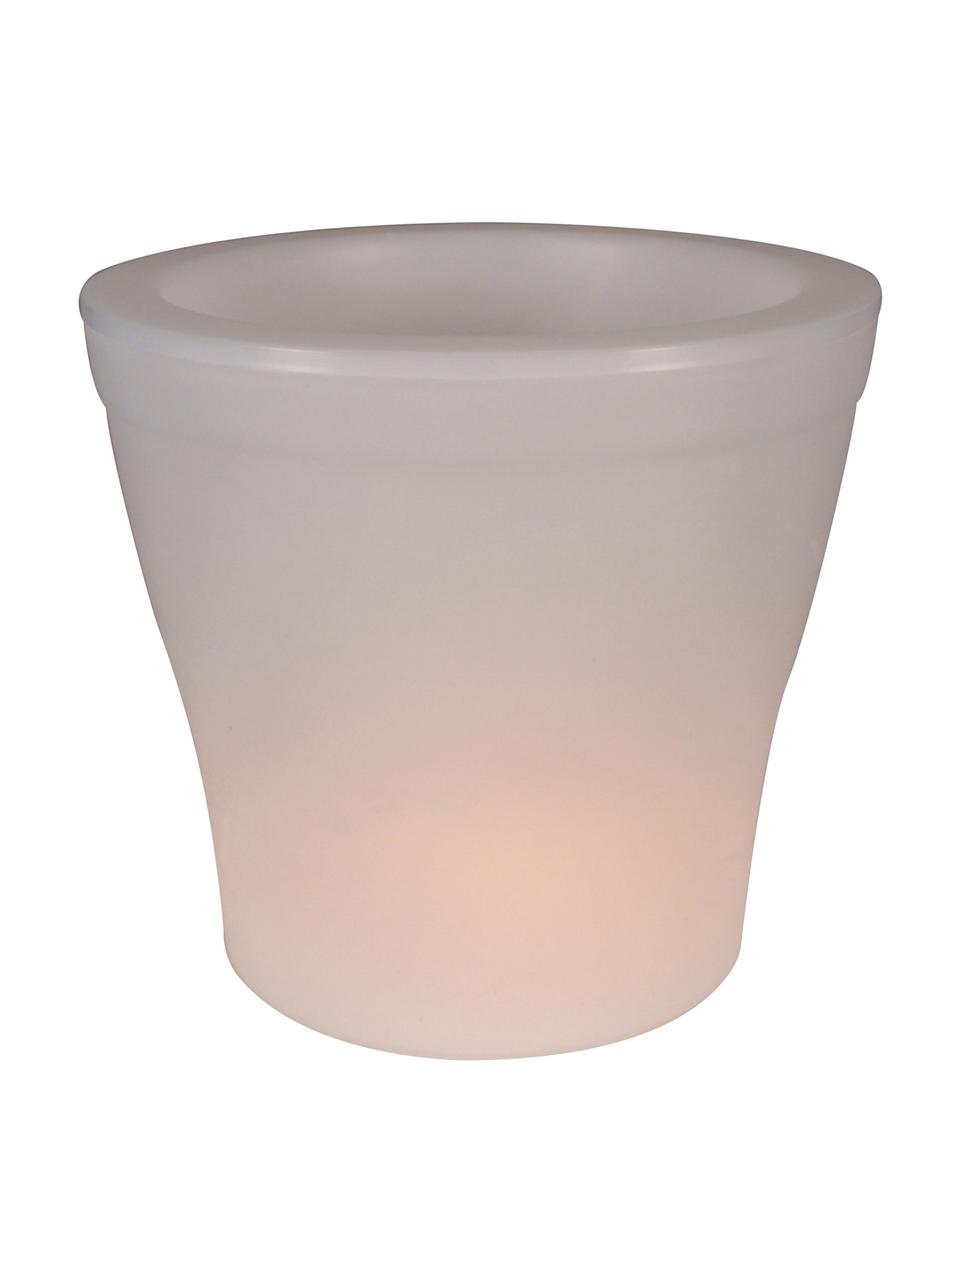 Mobile LED Aussenleuchte Flowerpot, Kunststoff, Weiss, Ø 39 x H 37 cm